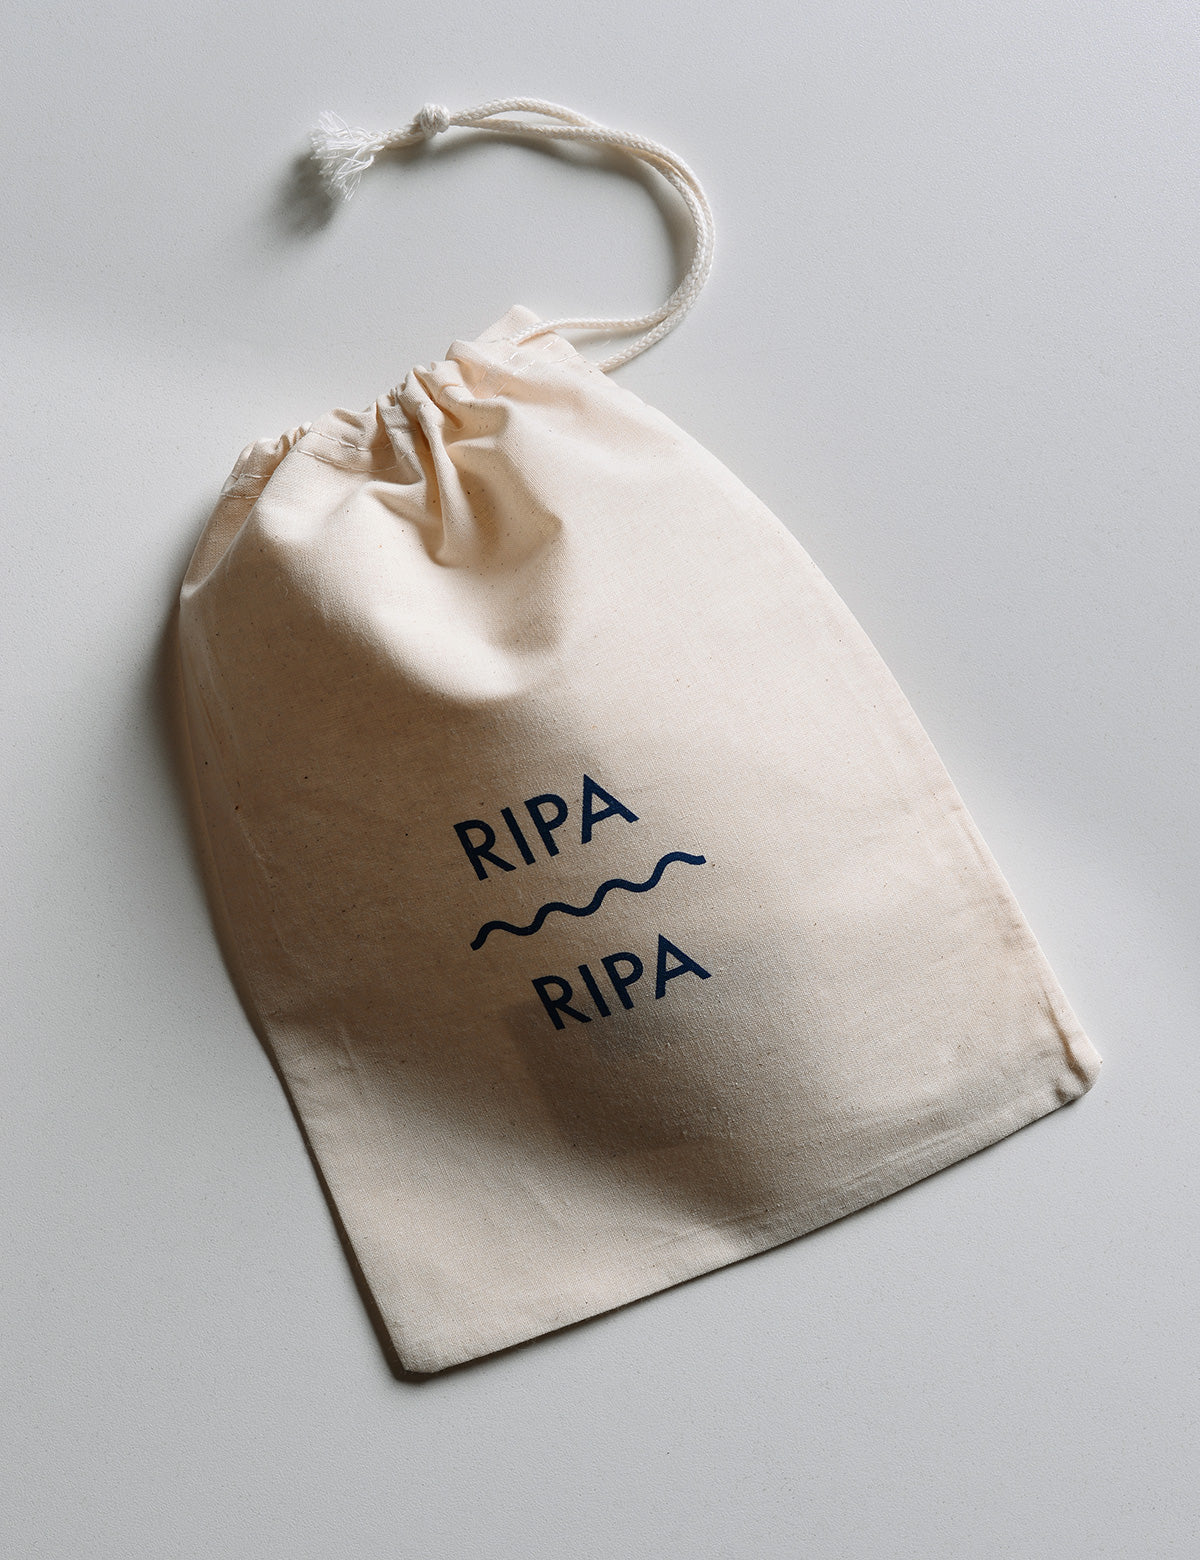 Travel bag that Ripa Ripa Swim Shorts in Verde Oliva is packaged in